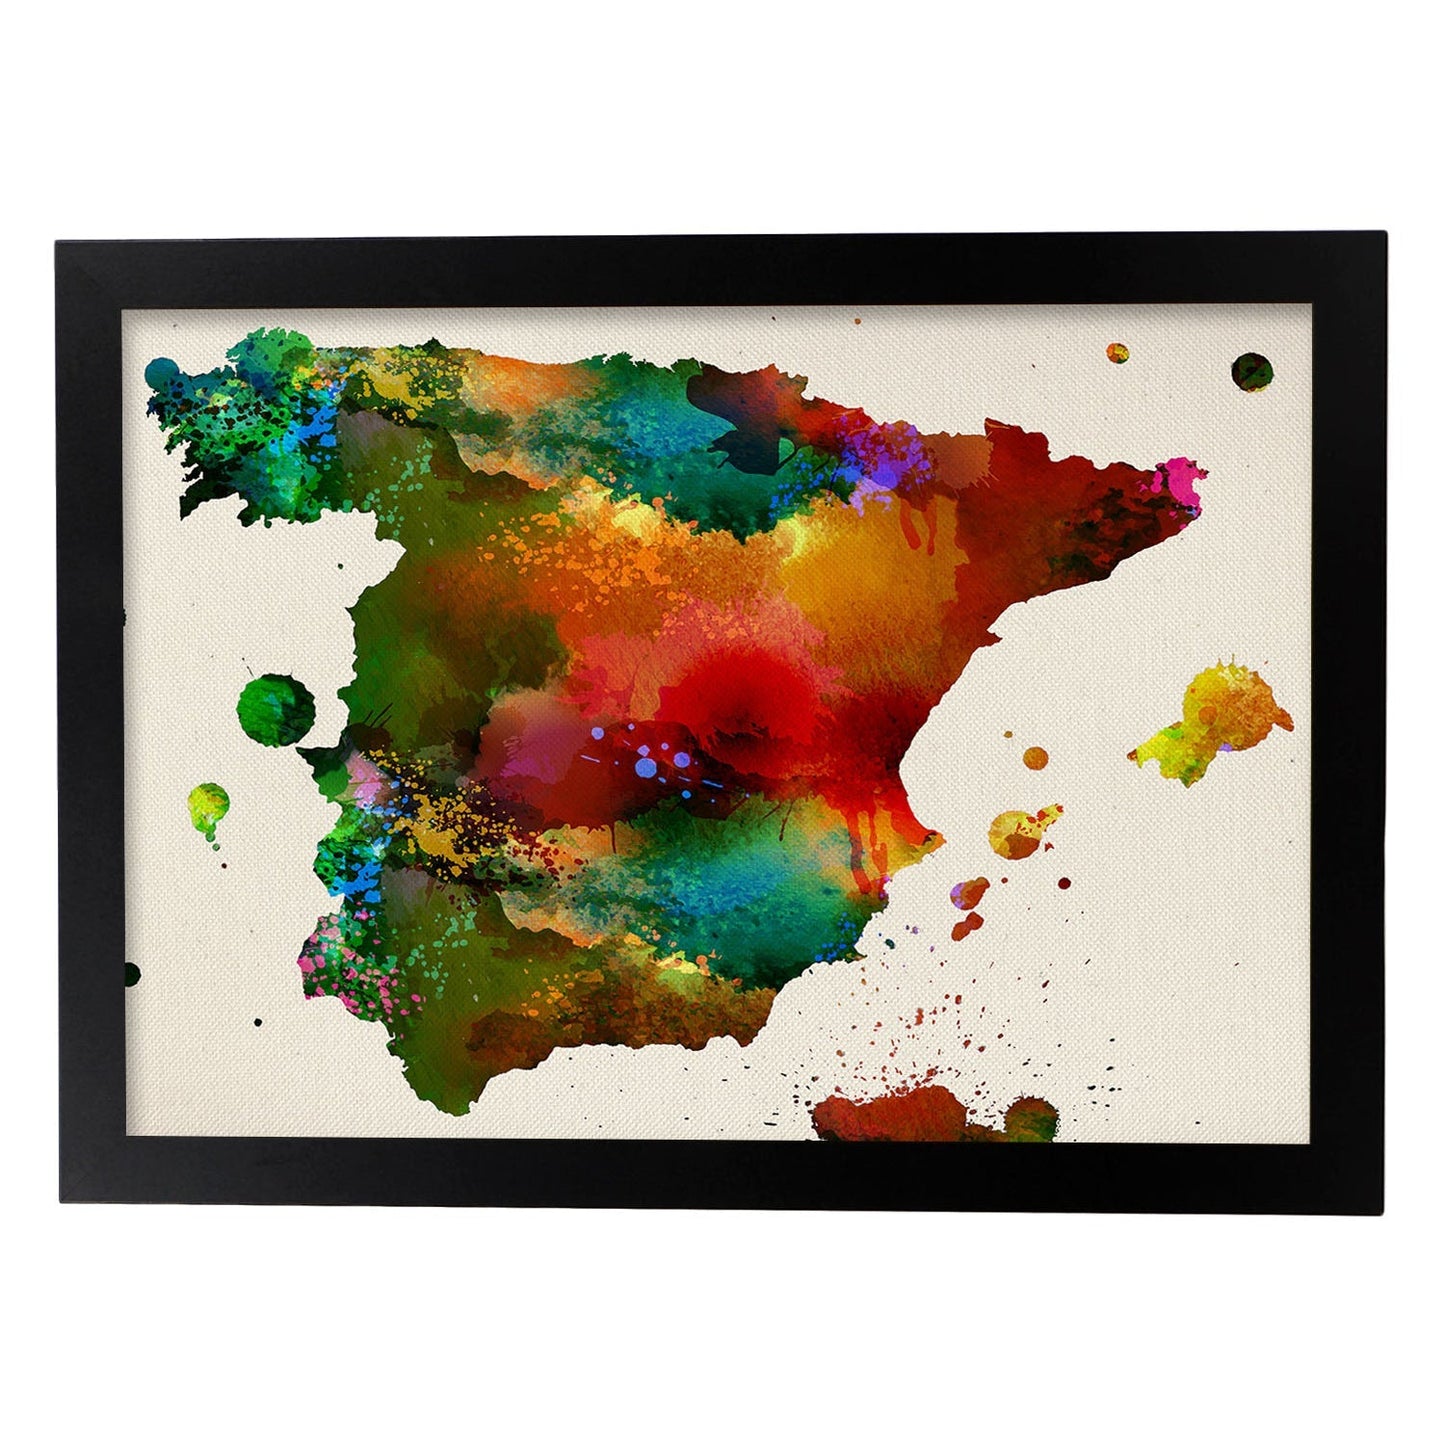 Poster de Mapa Espana 3. Láminas e ilustraciones de ciudades, comunidades, y mapas de España.-Artwork-Nacnic-A3-Marco Negro-Nacnic Estudio SL